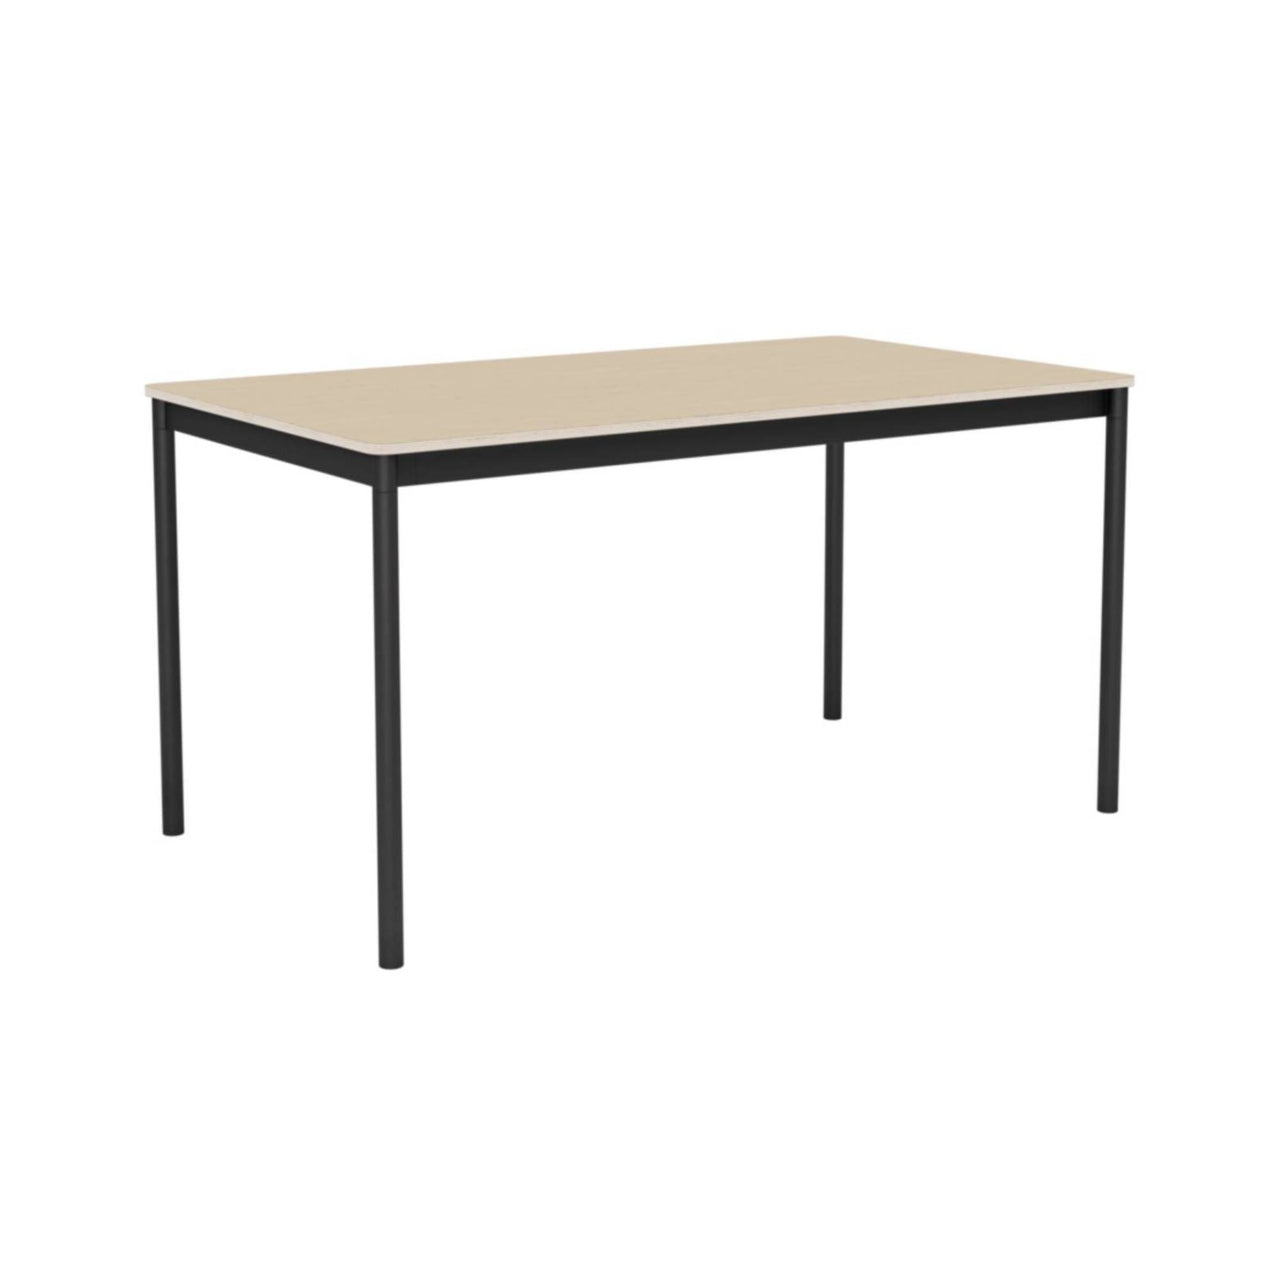 Base Table: Small + Oak Veneer + Plywood Edge + Black